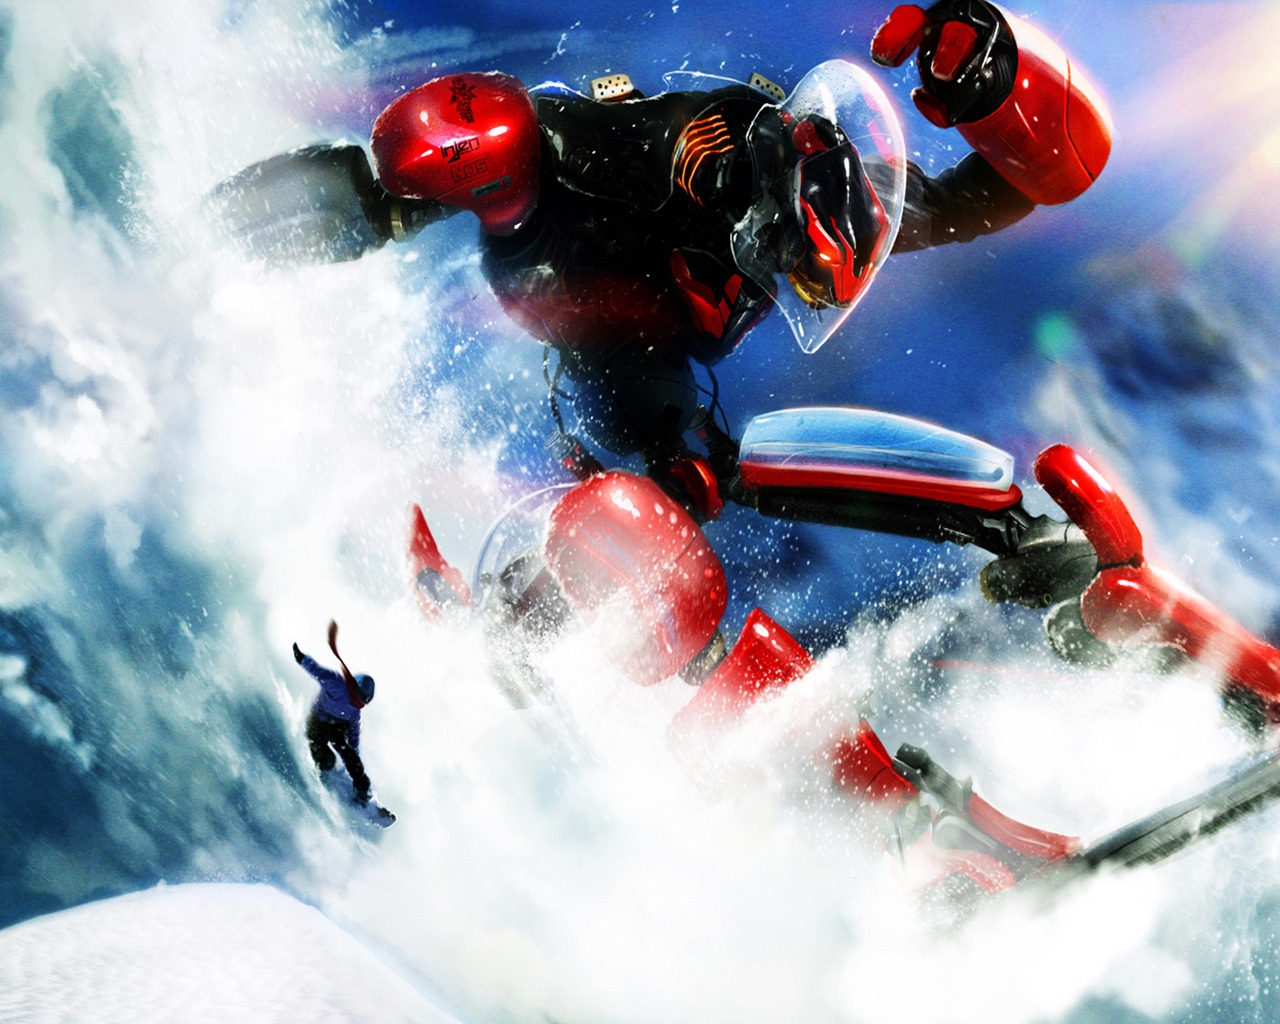 Fantasy Snowboarding for 1280 x 1024 resolution